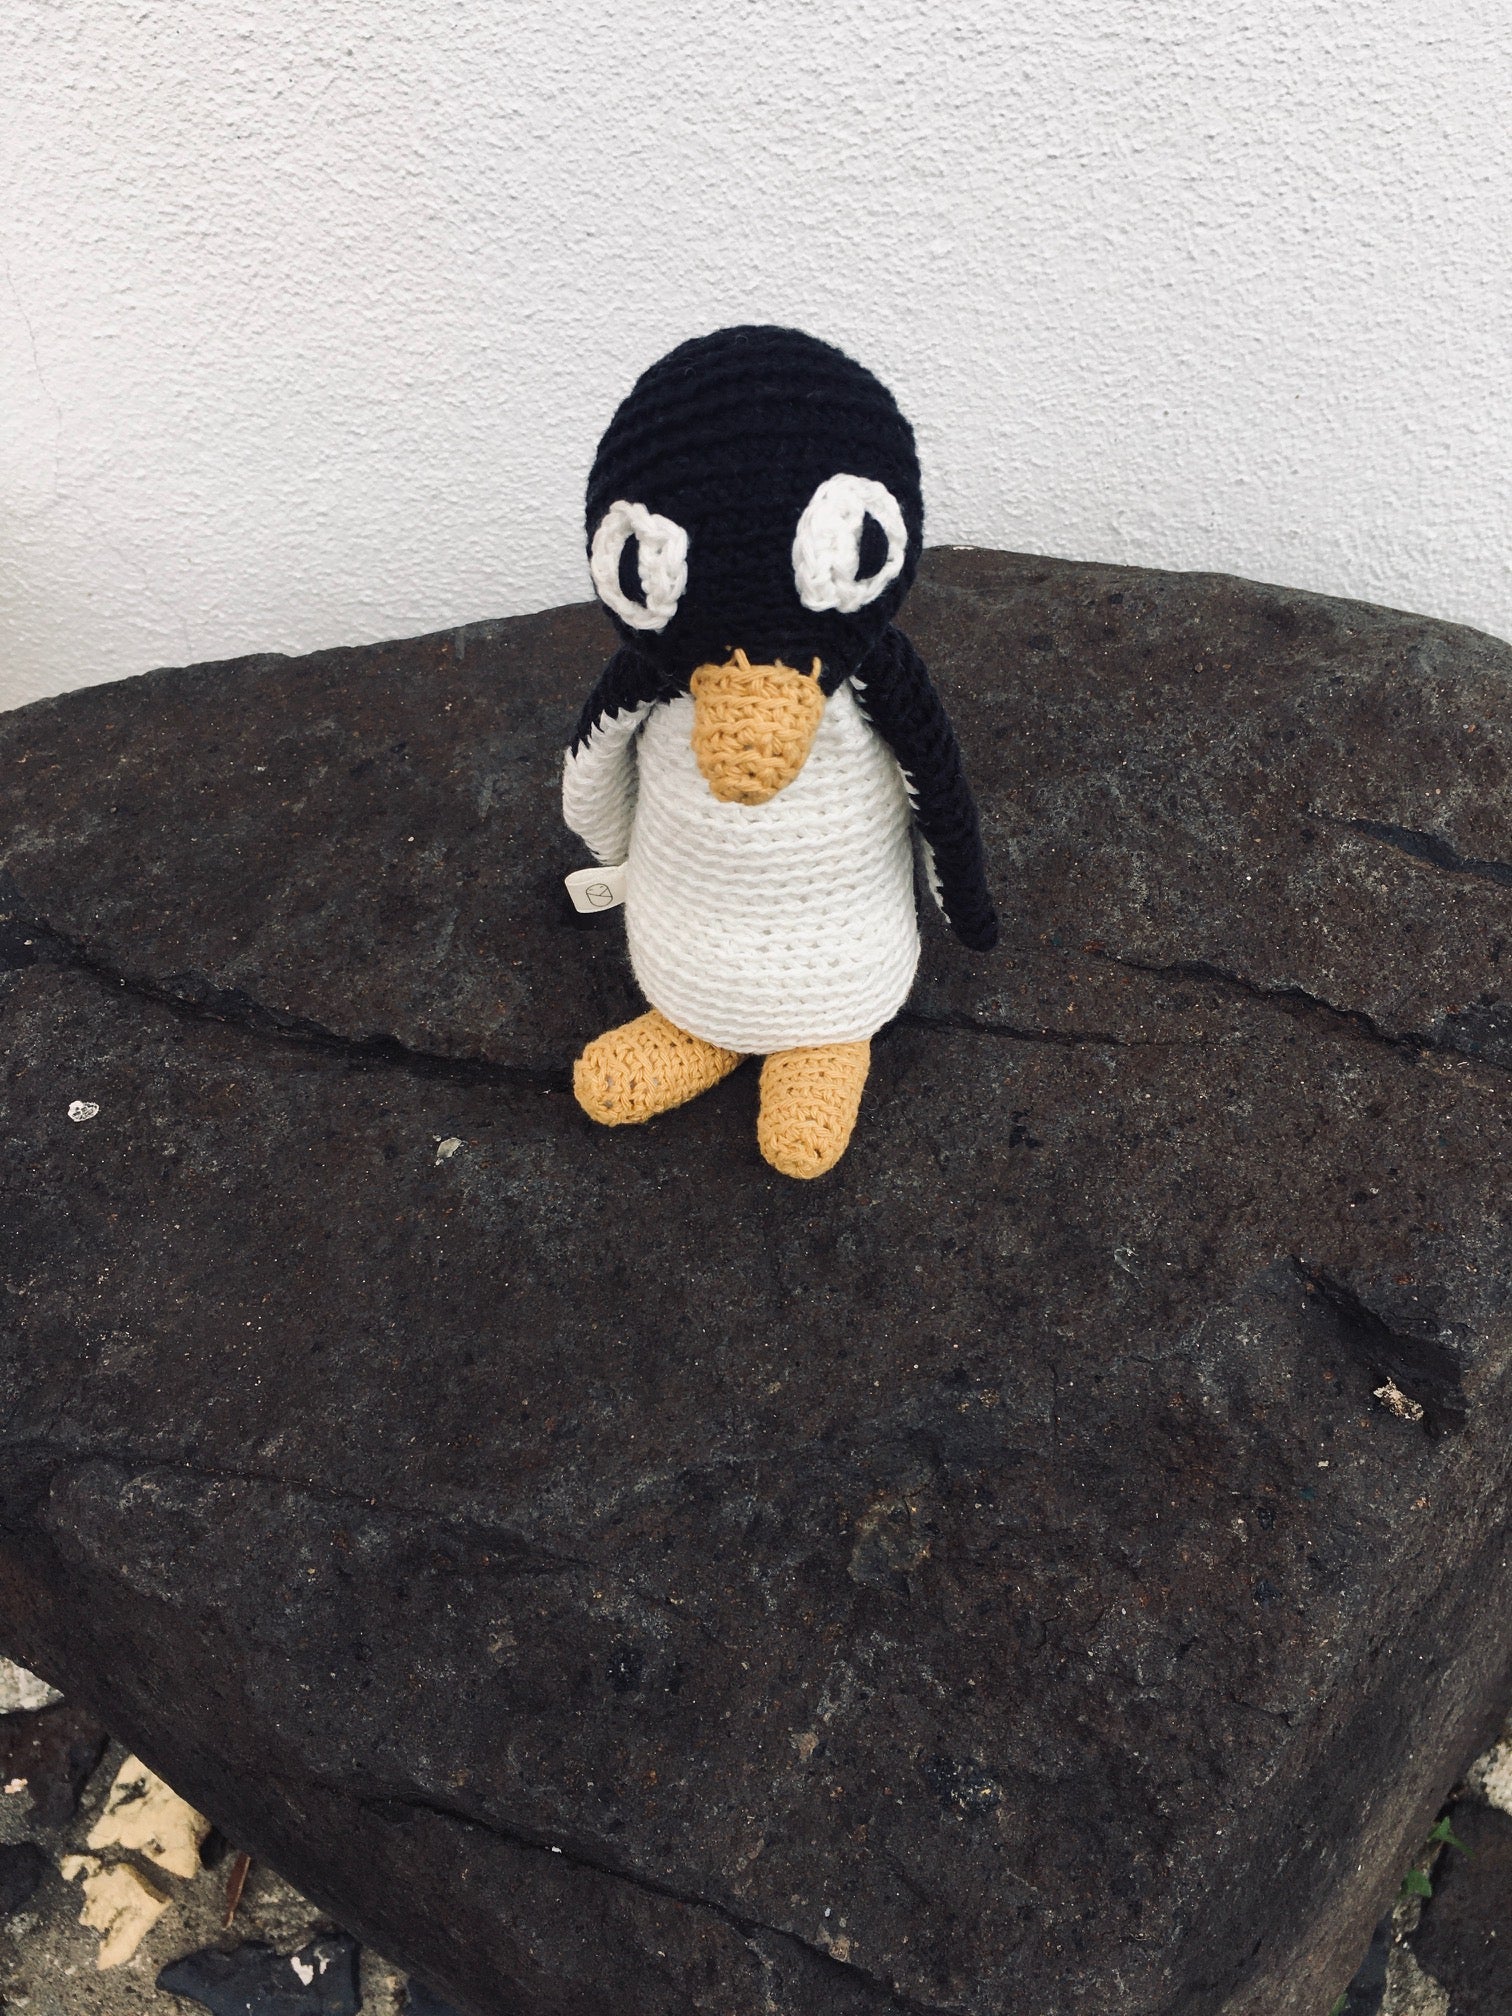 Barney the Pinguin